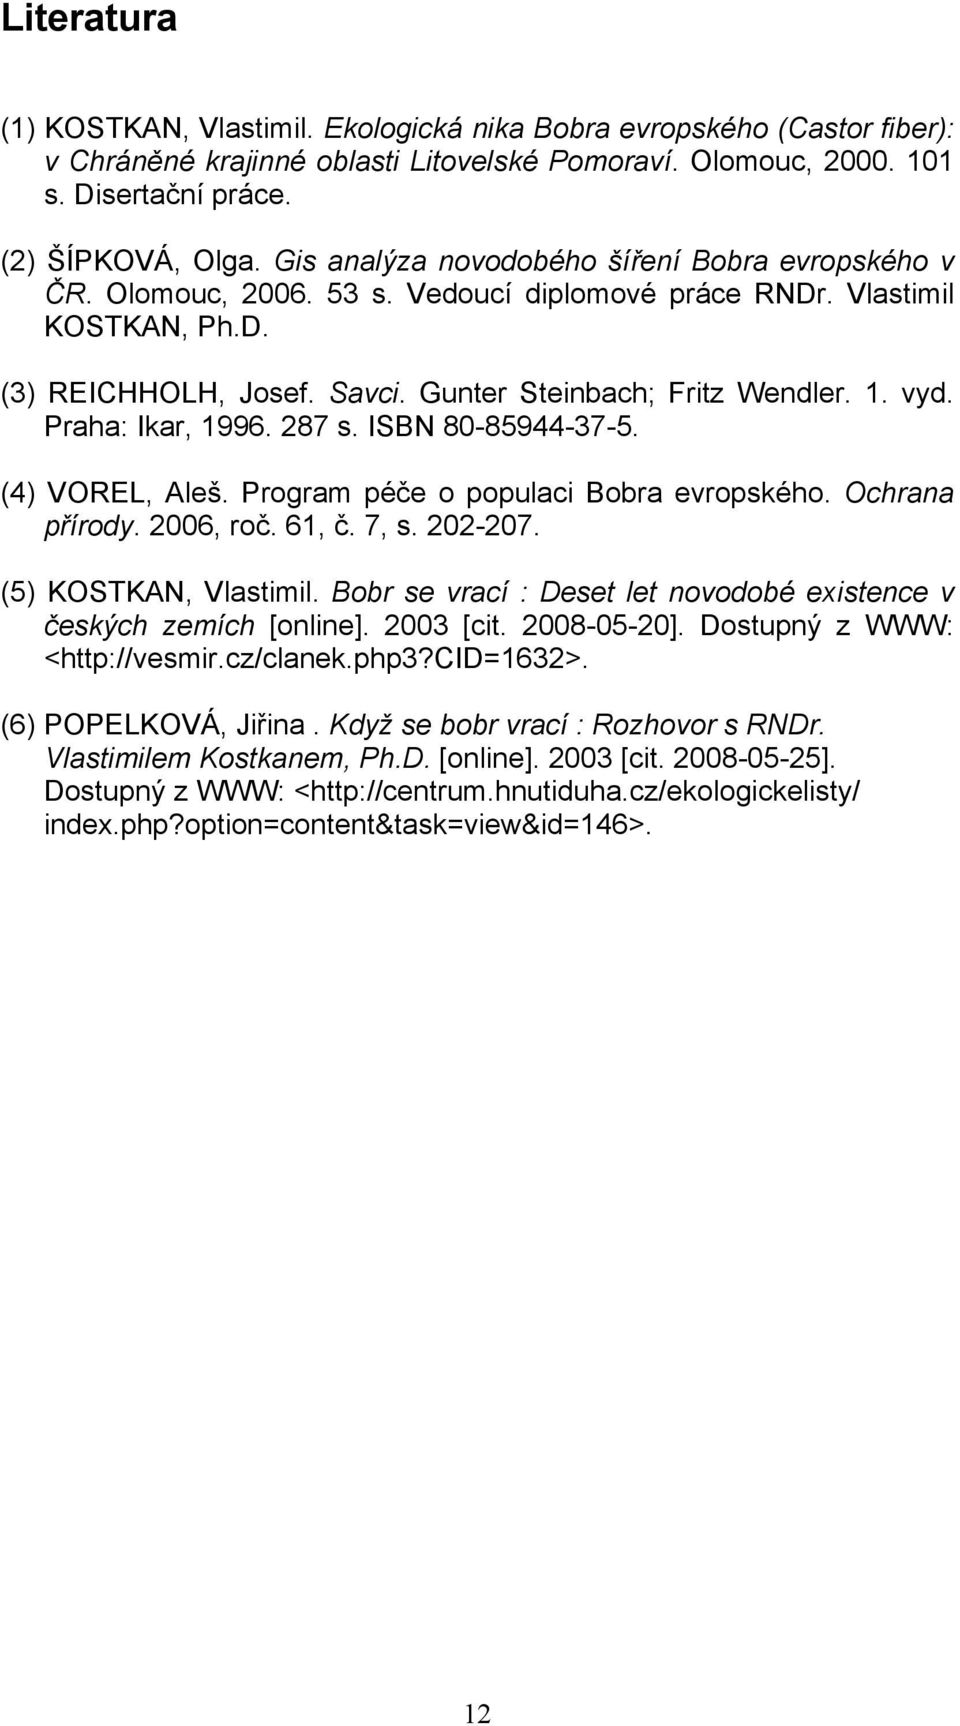 Praha: Ikar, 1996. 287 s. ISBN 80-85944-37-5. (4) VOREL, Aleš. Program péče o populaci Bobra evropského. Ochrana přírody. 2006, roč. 61, č. 7, s. 202-207. (5) KOSTKAN, Vlastimil.